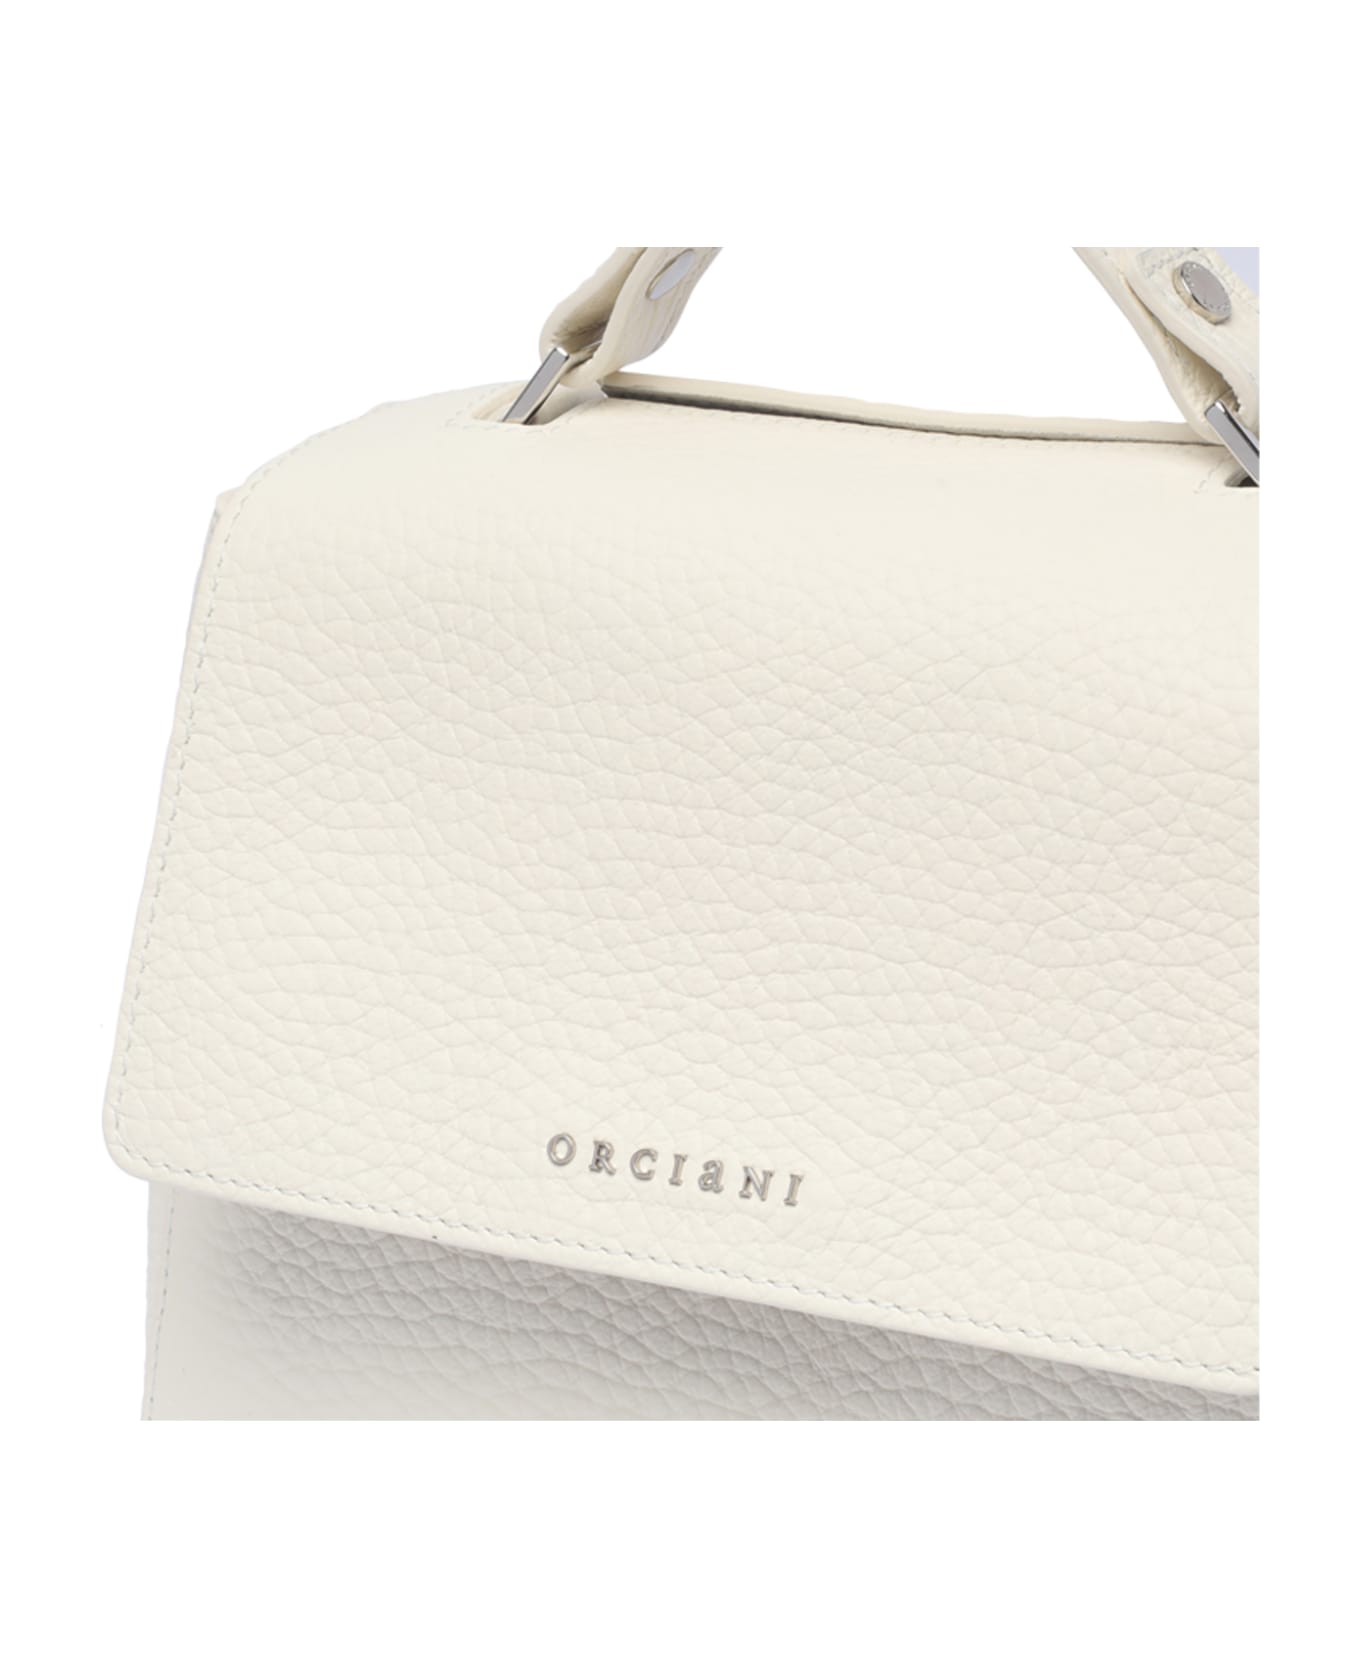 Orciani Soft Sveva Handbag - White